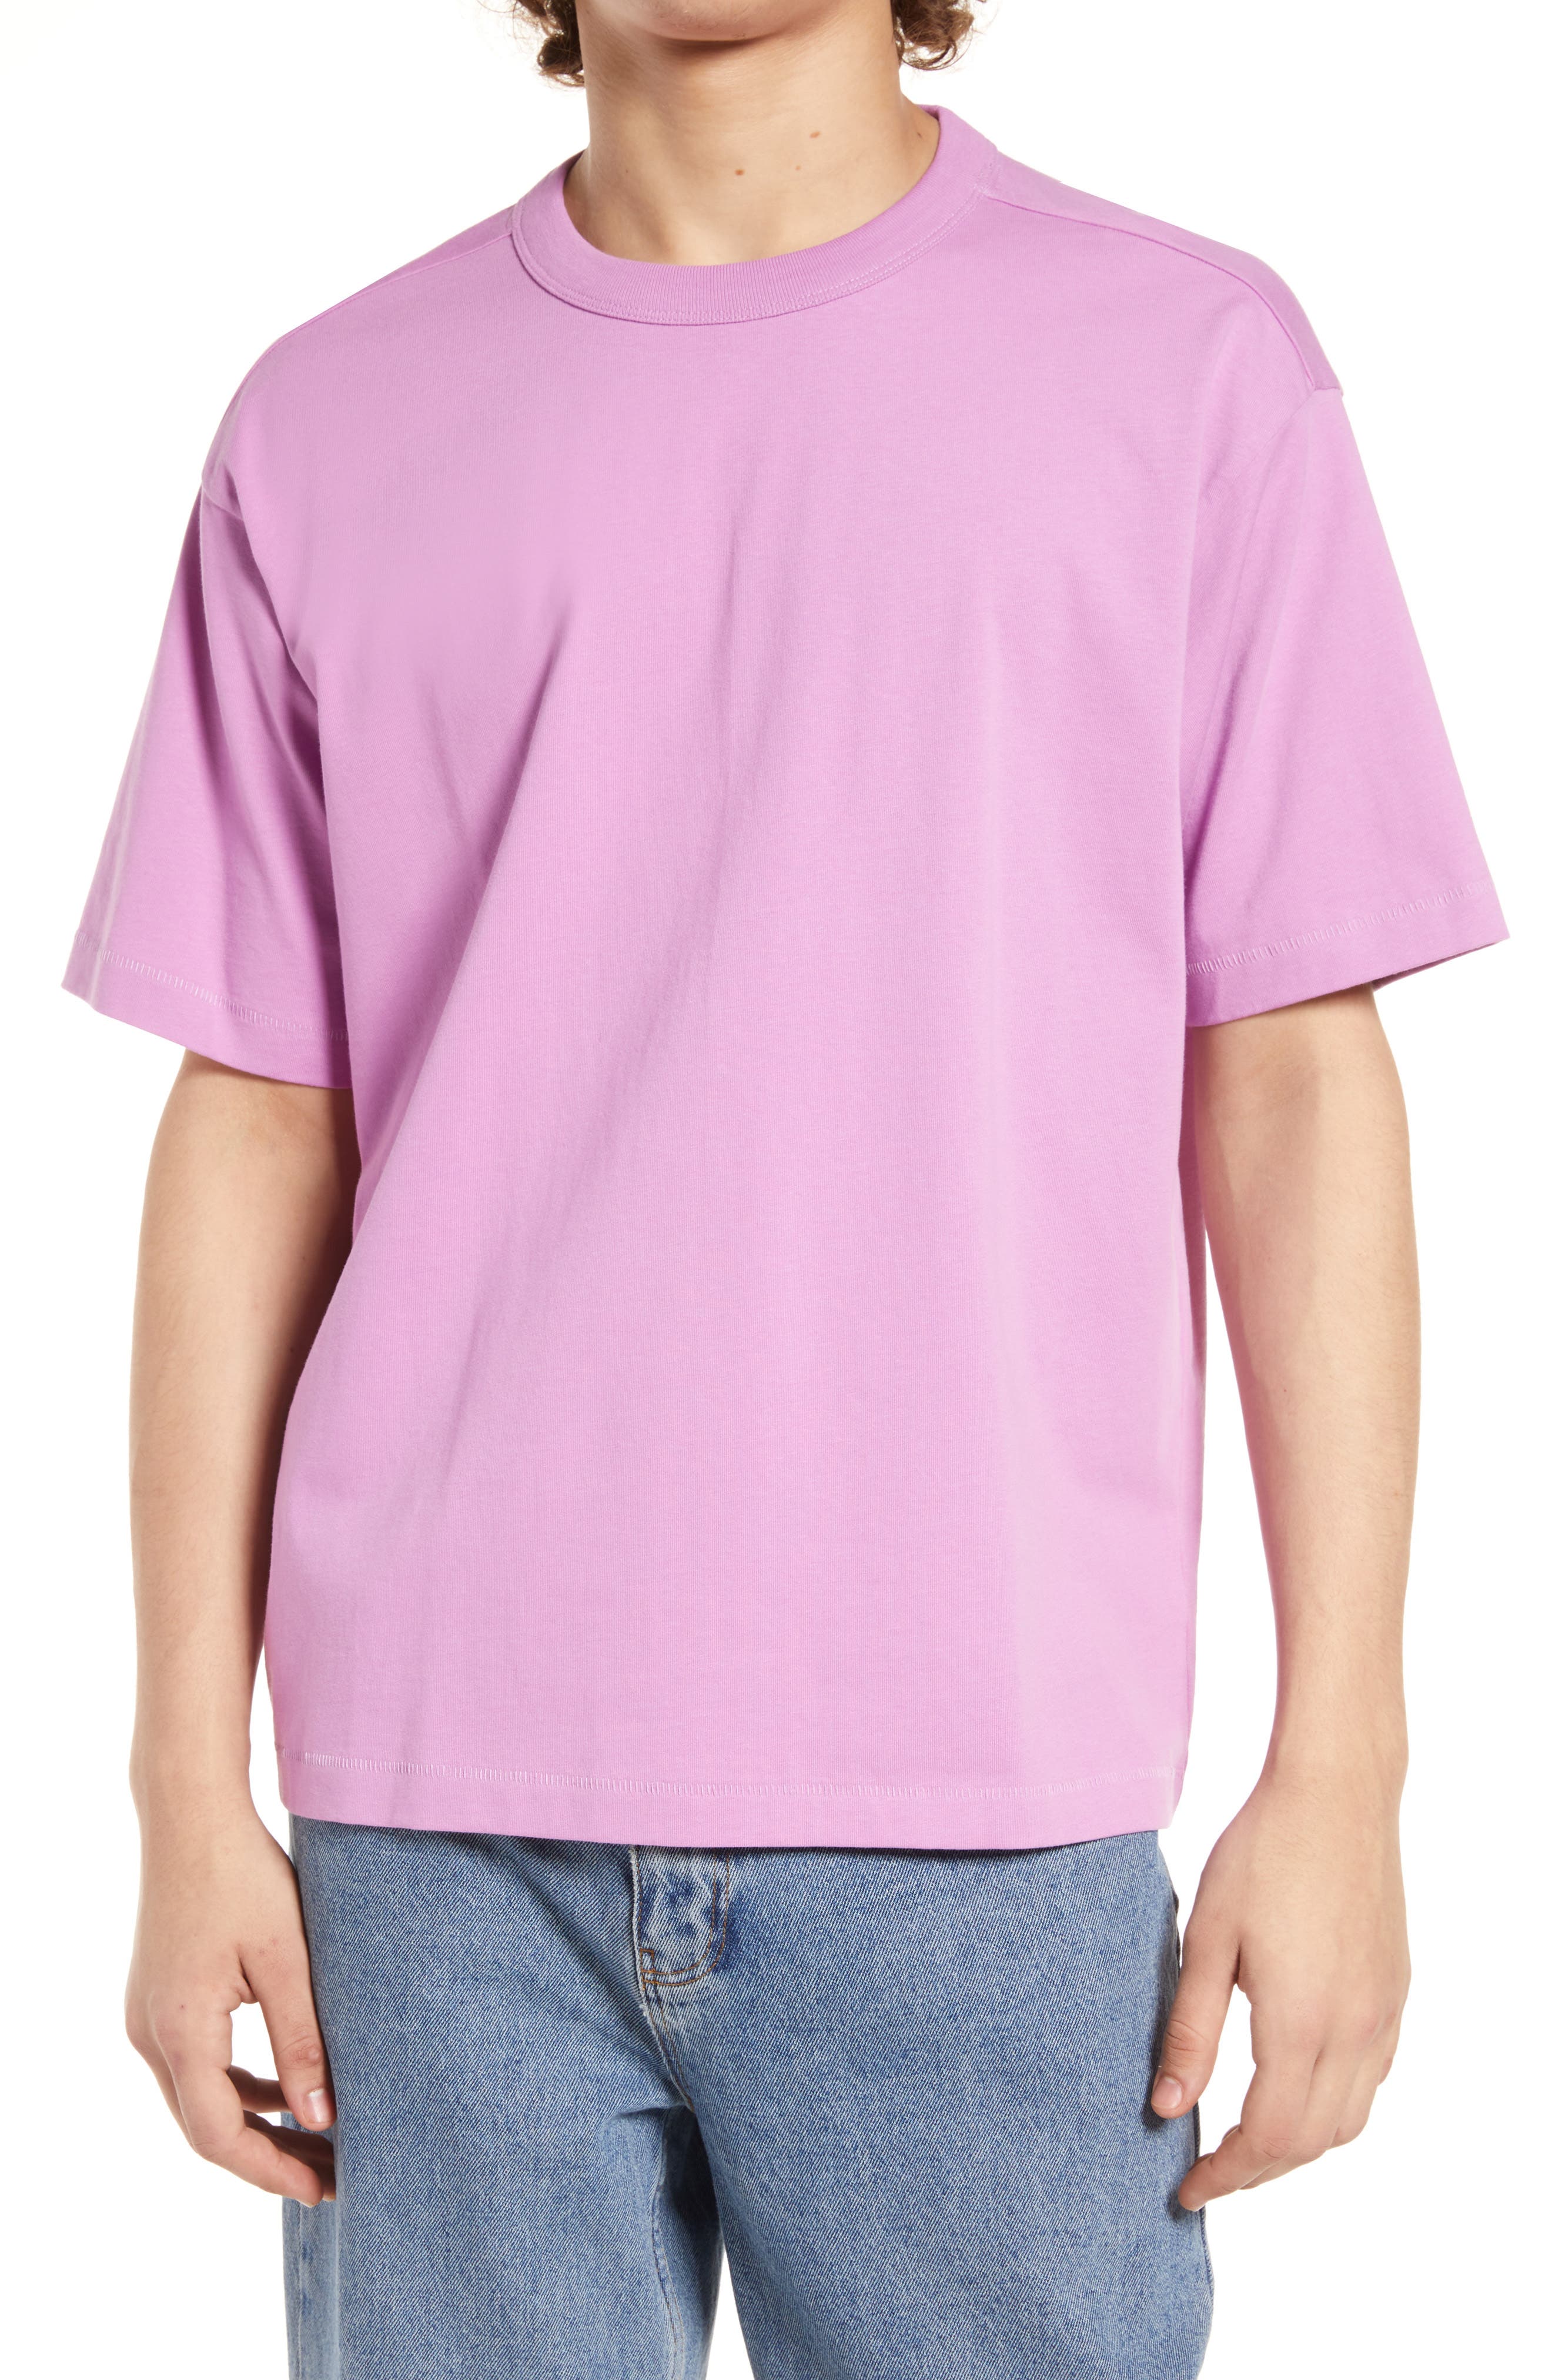 Boys Mens Cotton Short Sleeve T-Shirts Leisure Slim Fit Crew-Neck Tee Tops 